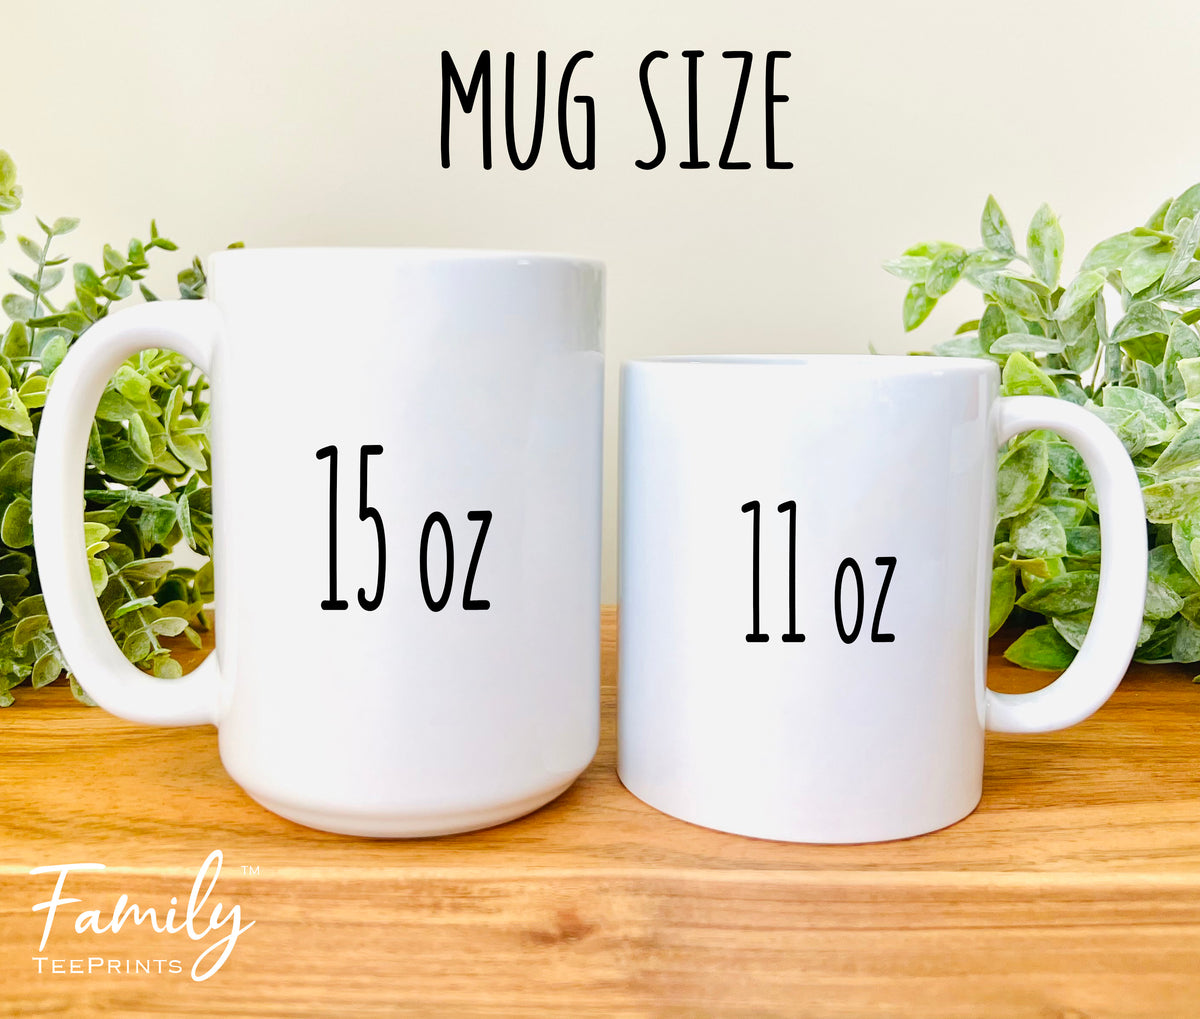 Zayda Noun  - Coffee Mug - Funny Zayda Gift - New Zayda Mug